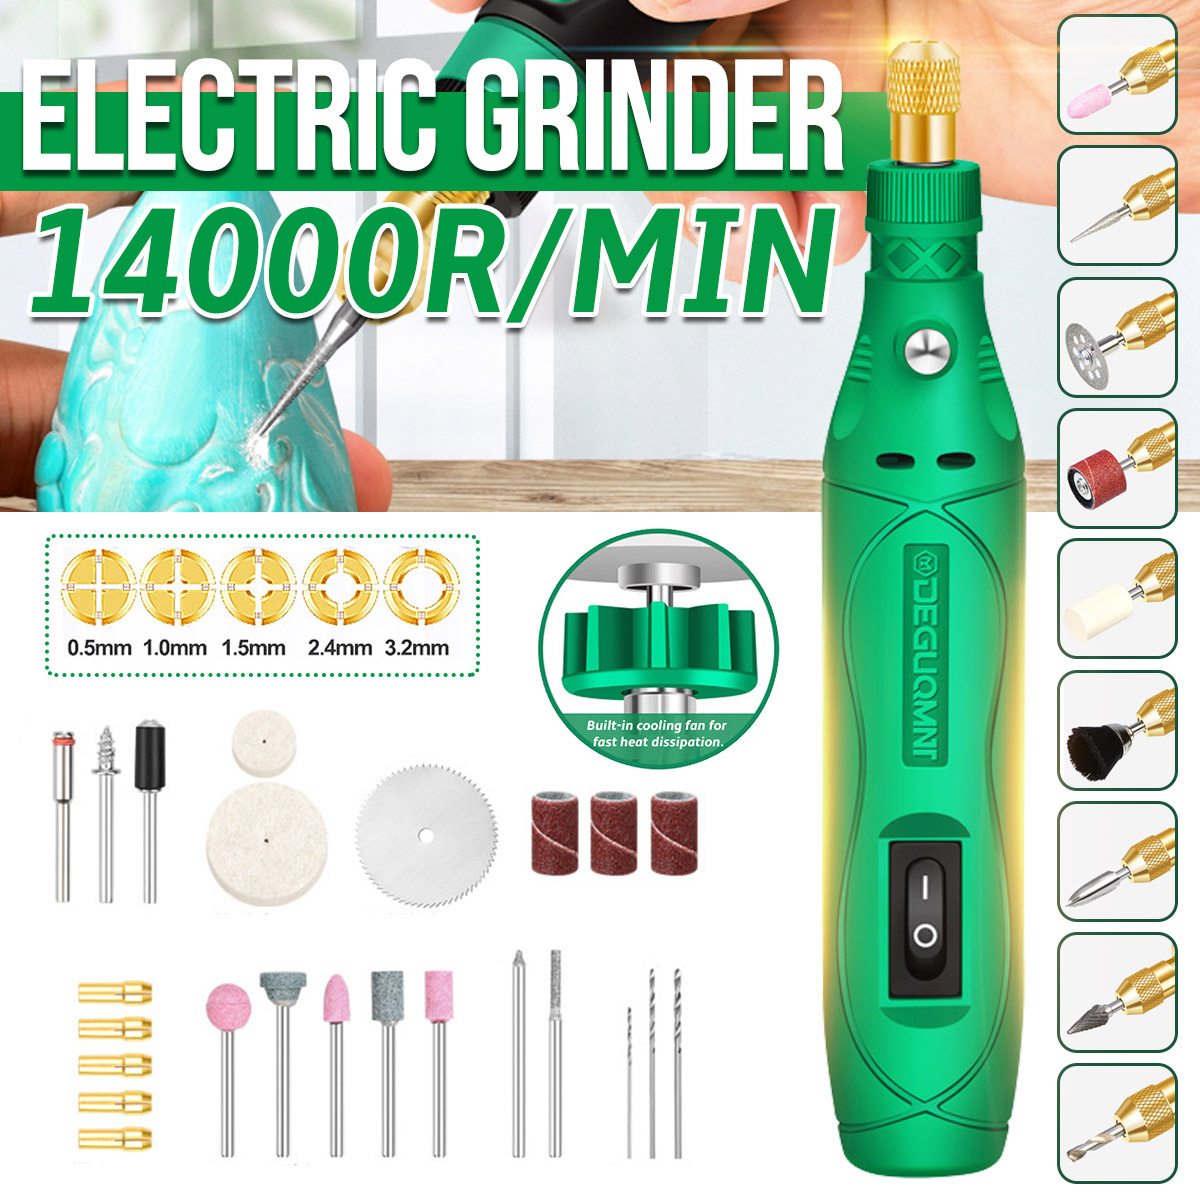 14000rmin-Electric-Grinding-Pen-Kit-Portable-Sanding-Grinding-Polishing-Engraving-Tool-For-Wood-Stai-1833054-2